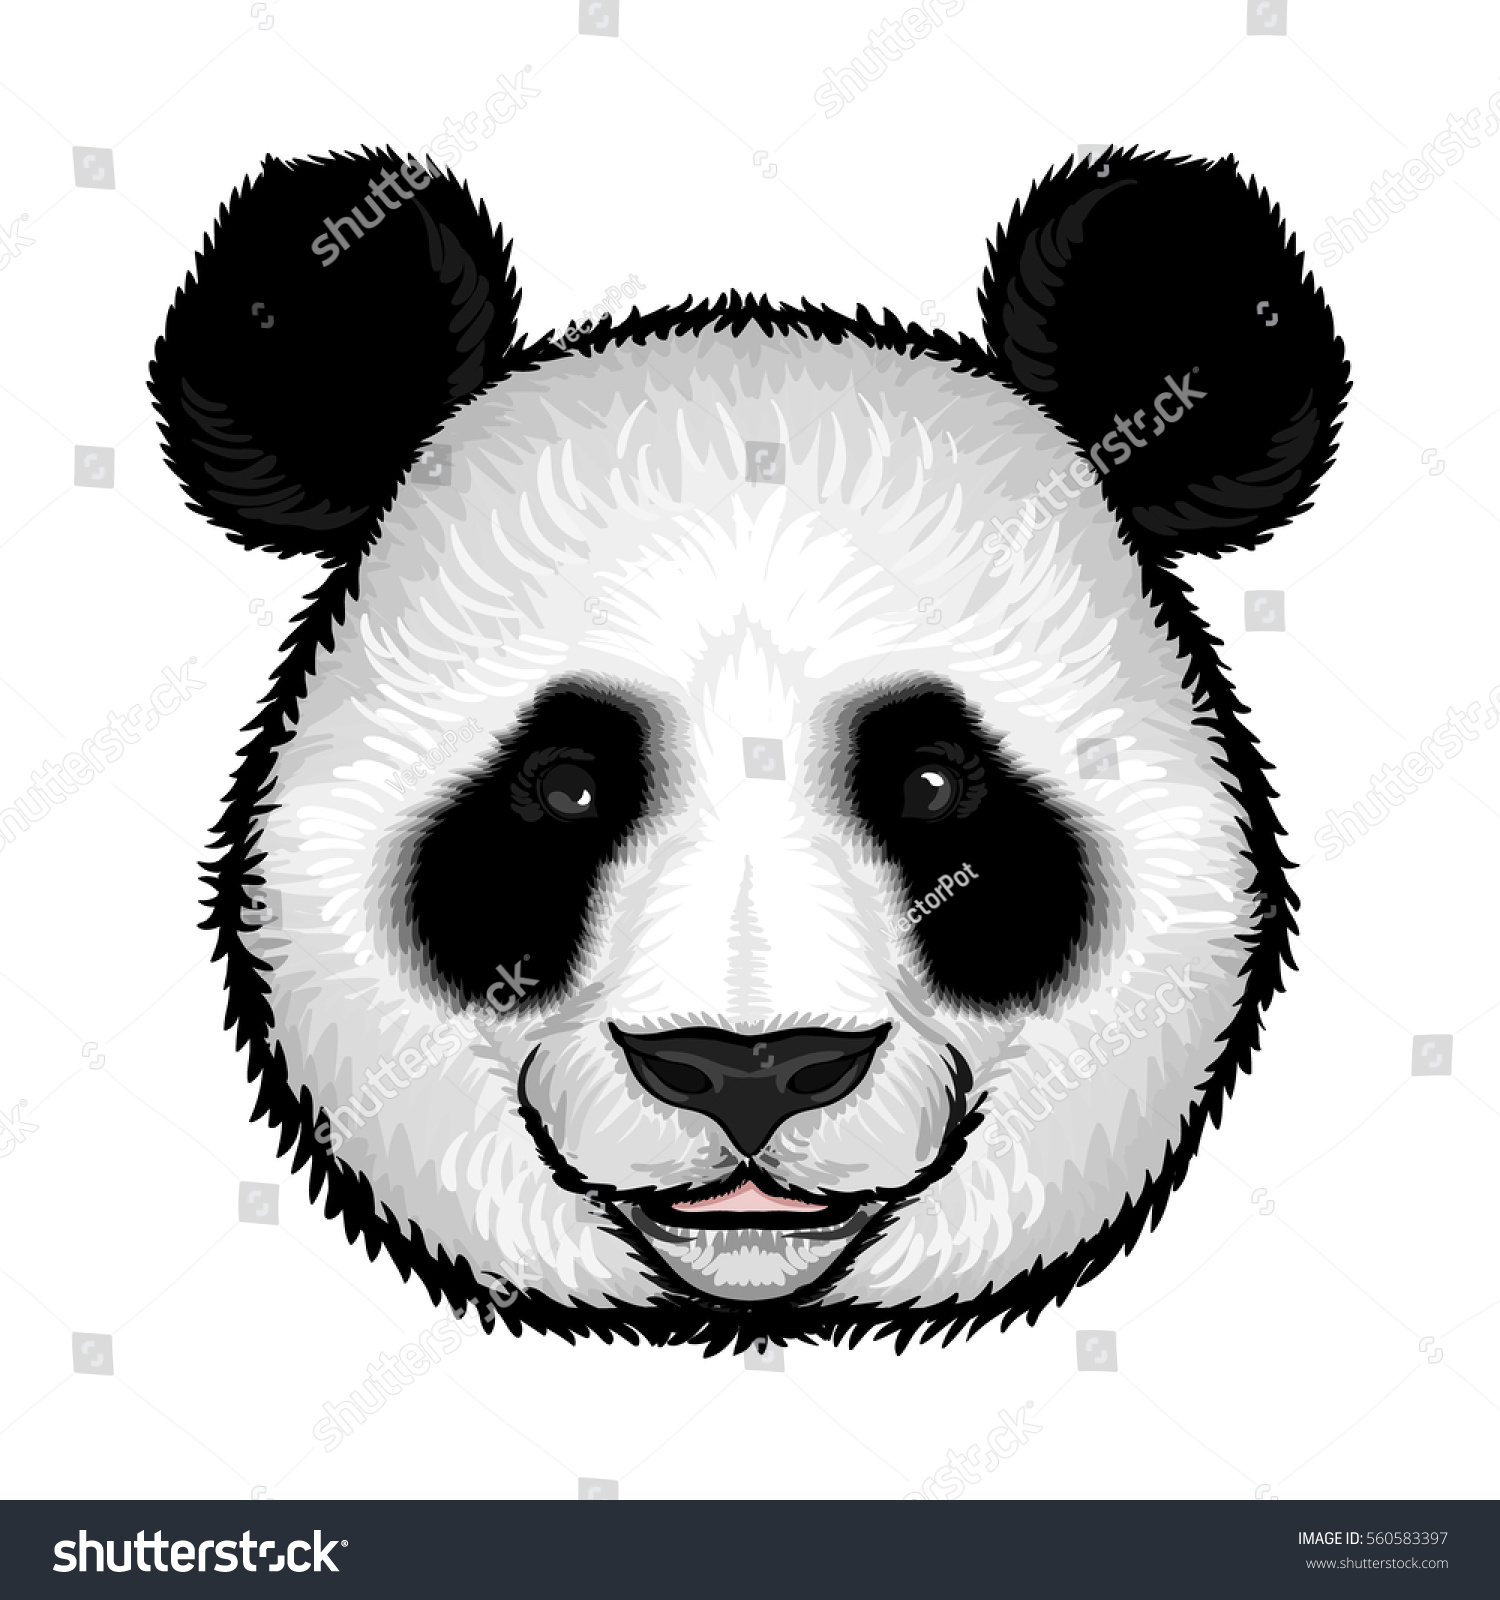 Cute Fluffy Panda Face Hand Drawn のベクター画像素材 ロイヤリティフリー